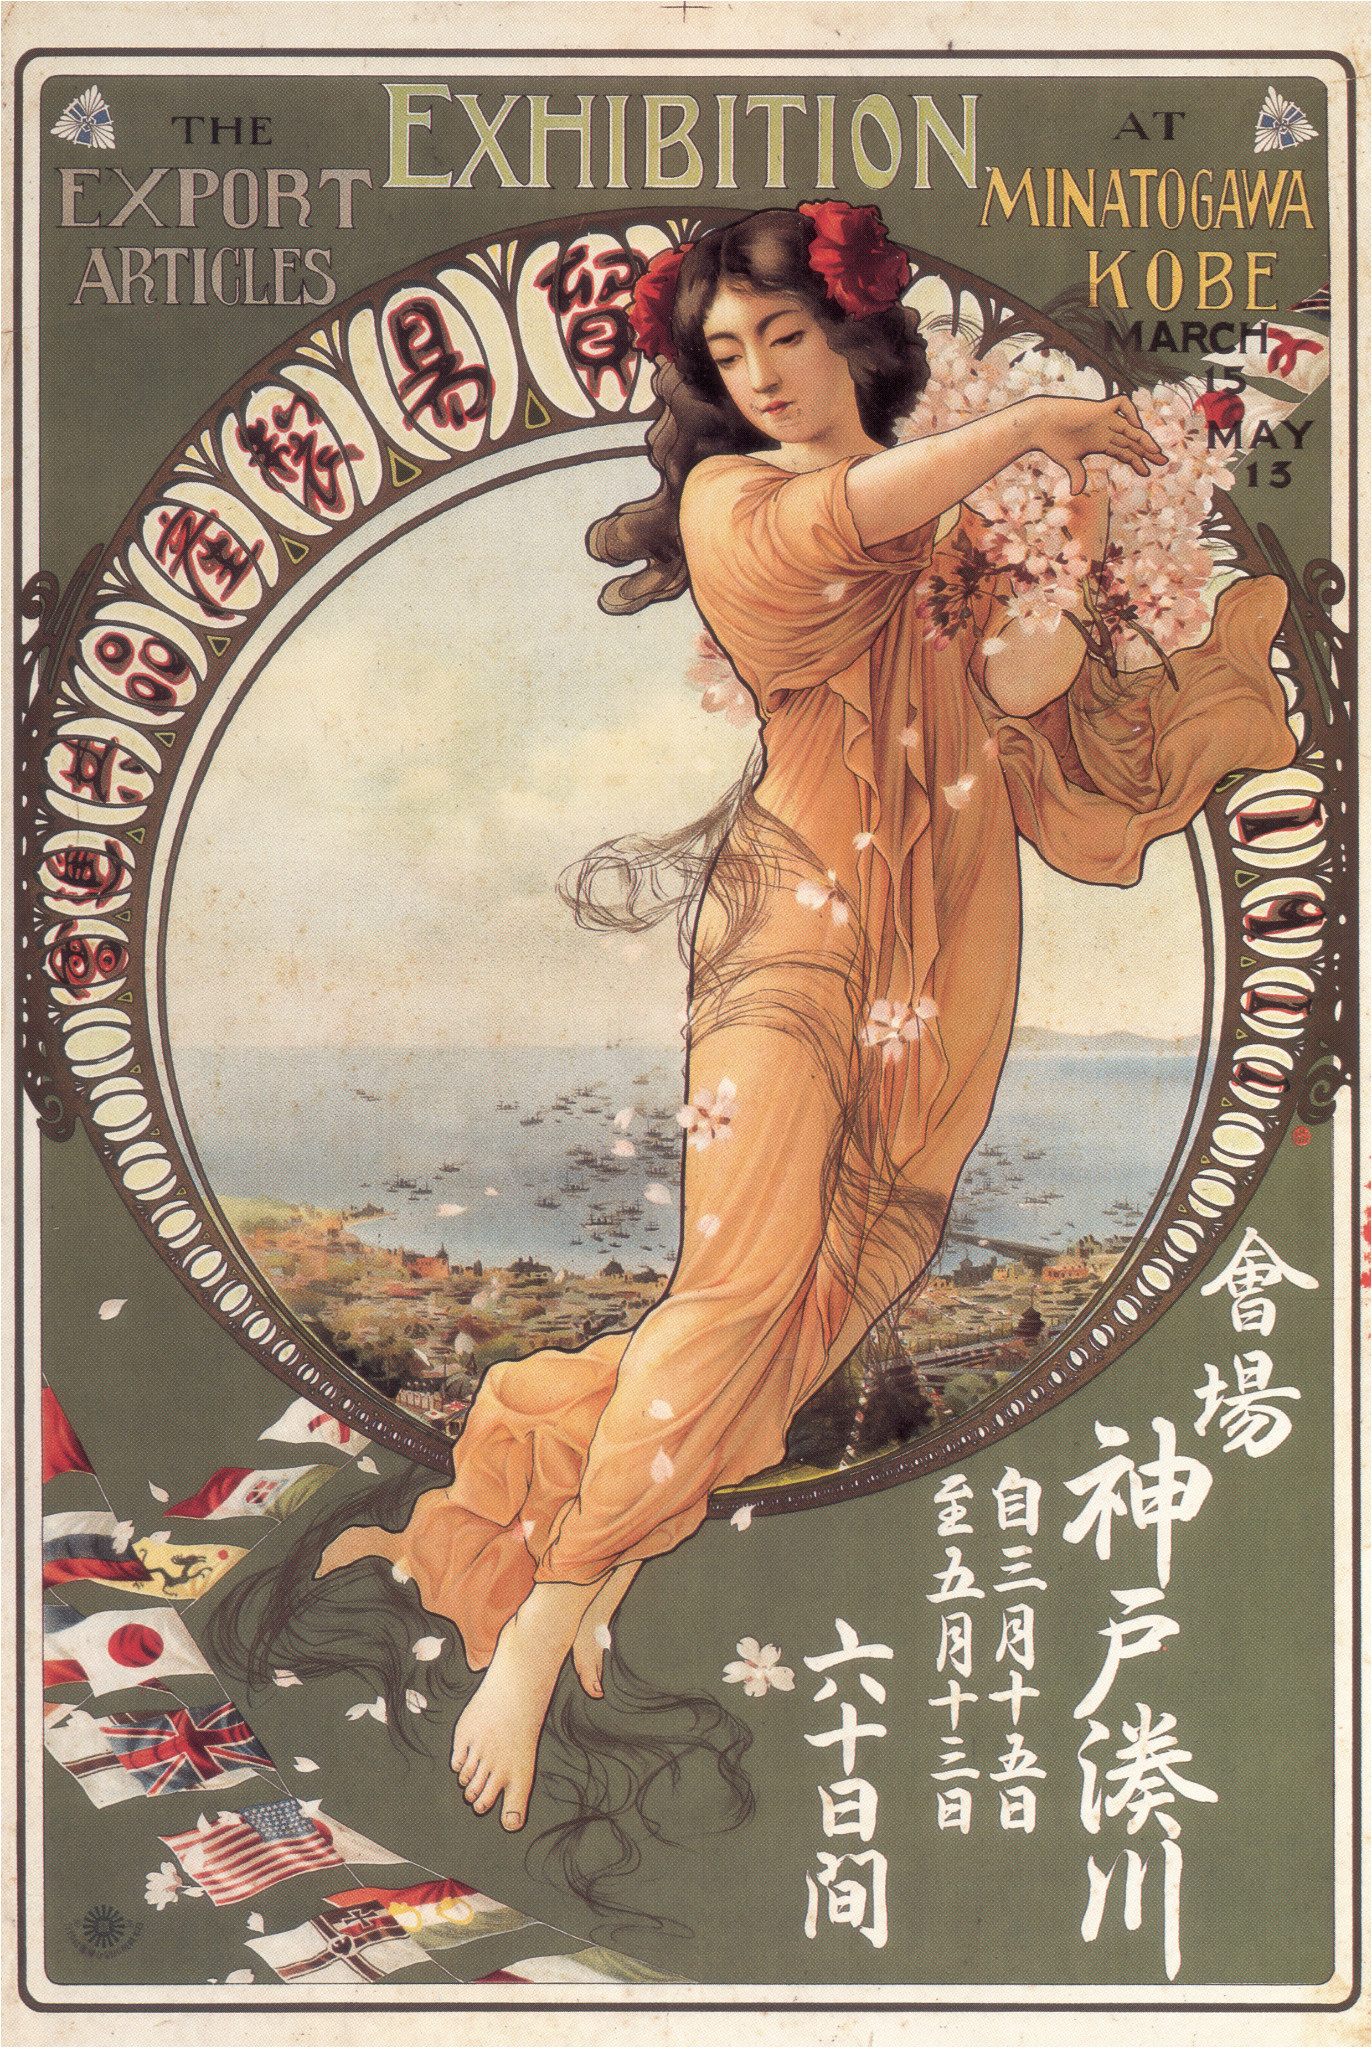 Tsunetomi Kitano: The exhibition at Minatogawa Kobe, 1911